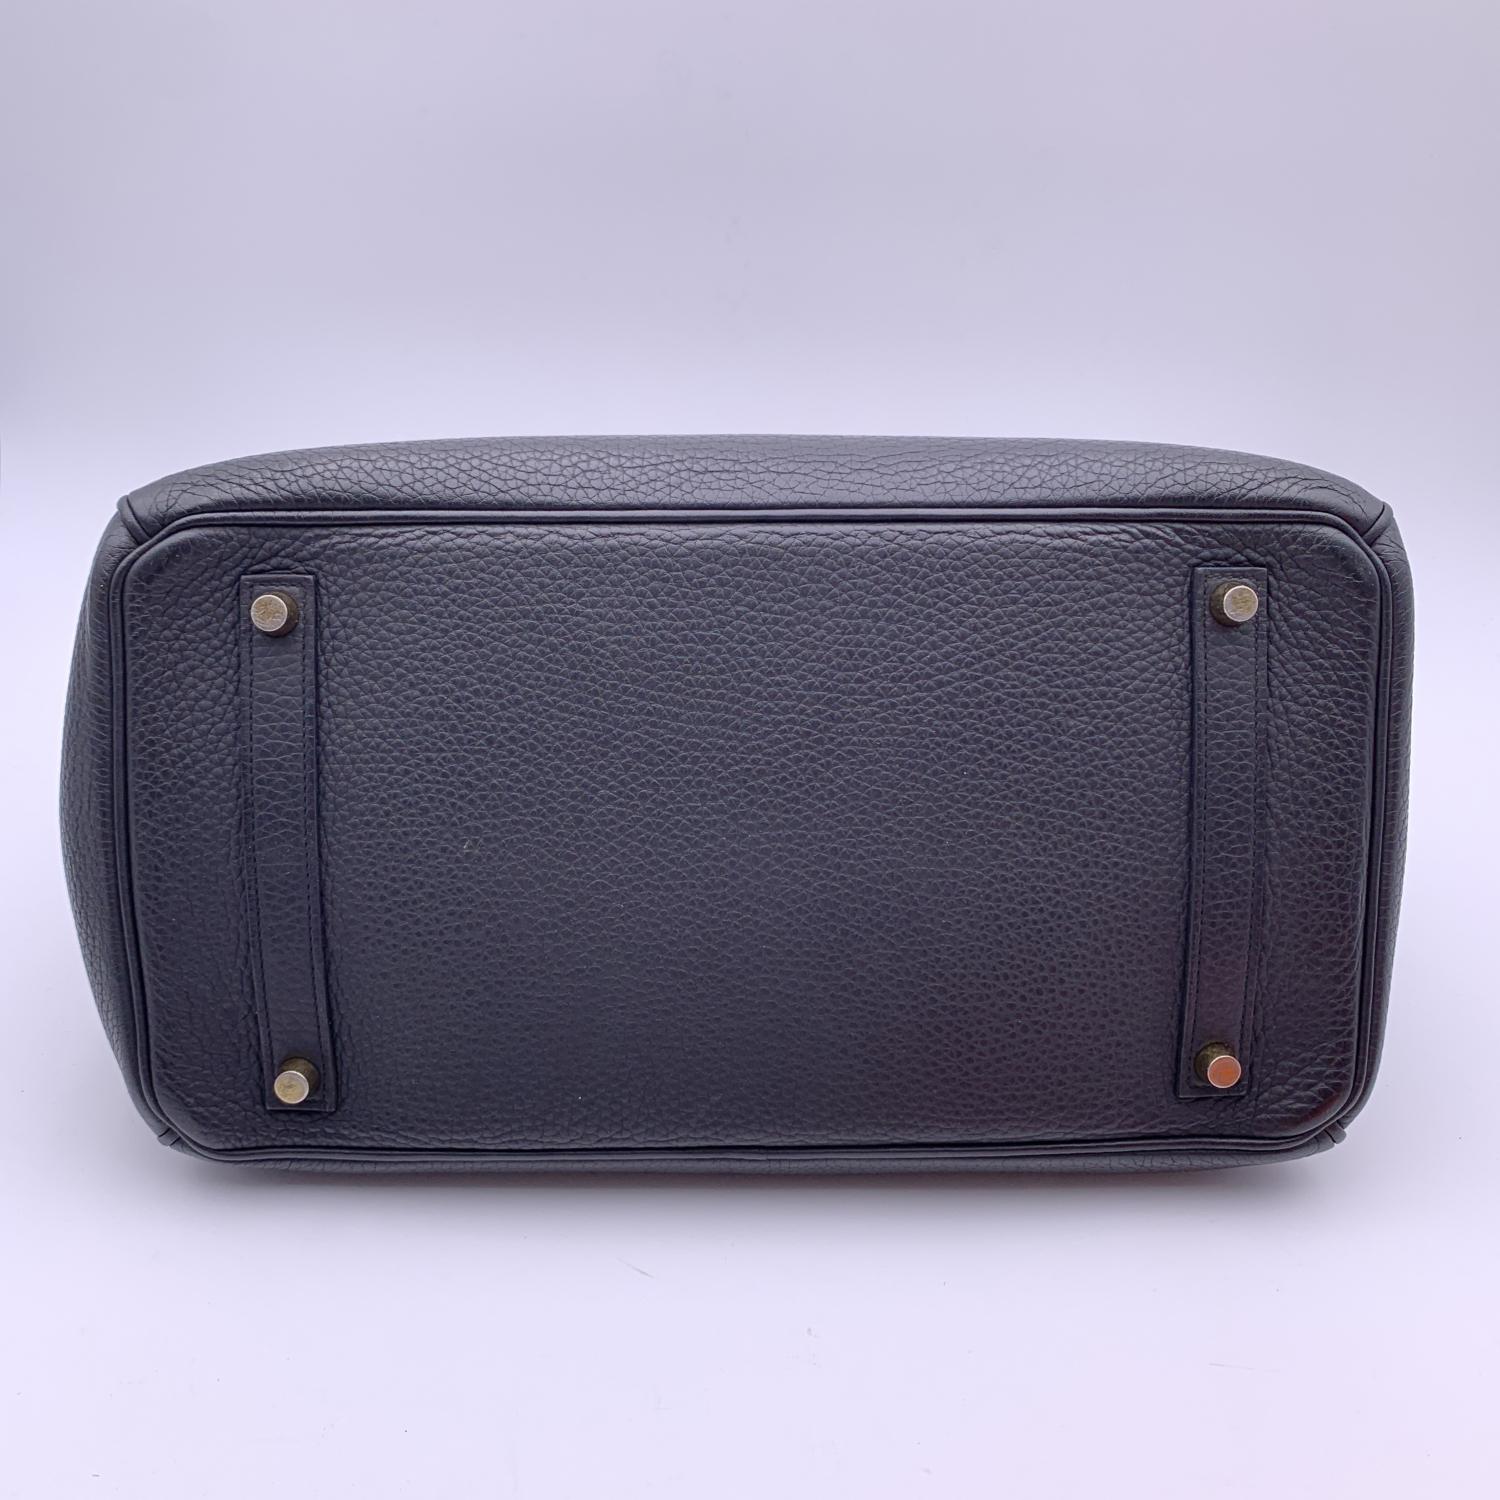 Hermes Black Clemence Leather Birkin 35 Top Handle Bag Satchel Handbag 2